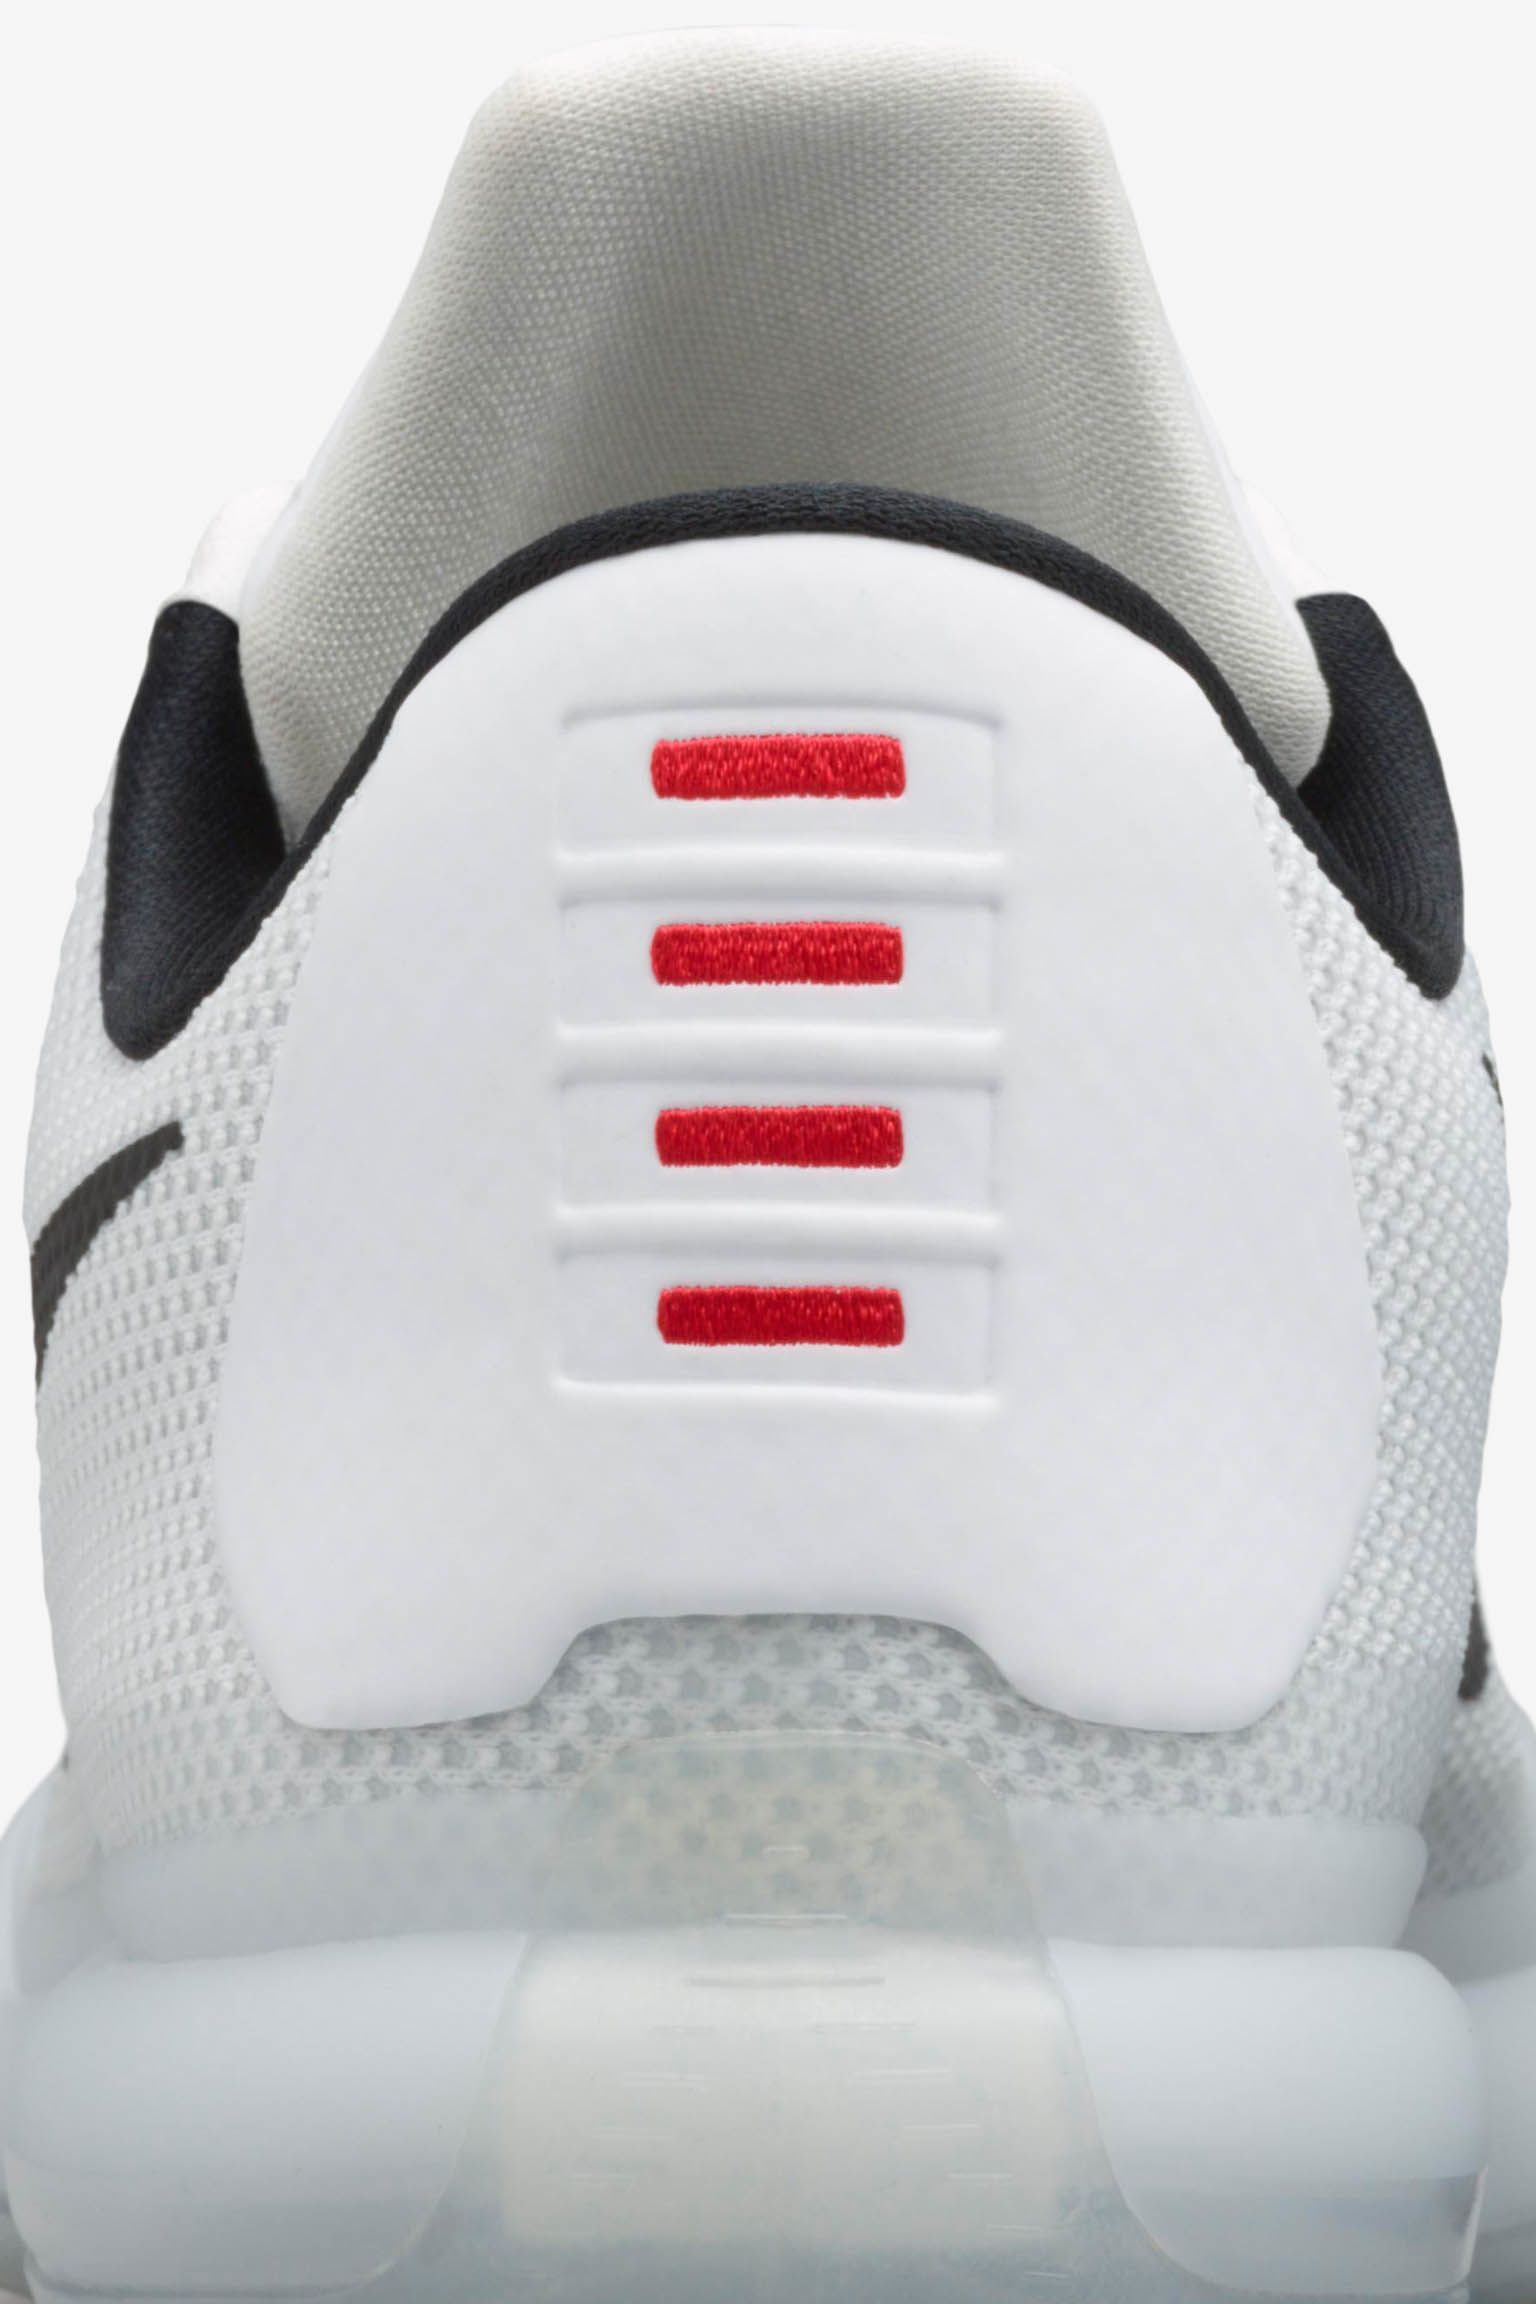 Nike Kobe 10 'Fundamentals' Release Date Nike⁠+ SNKRS